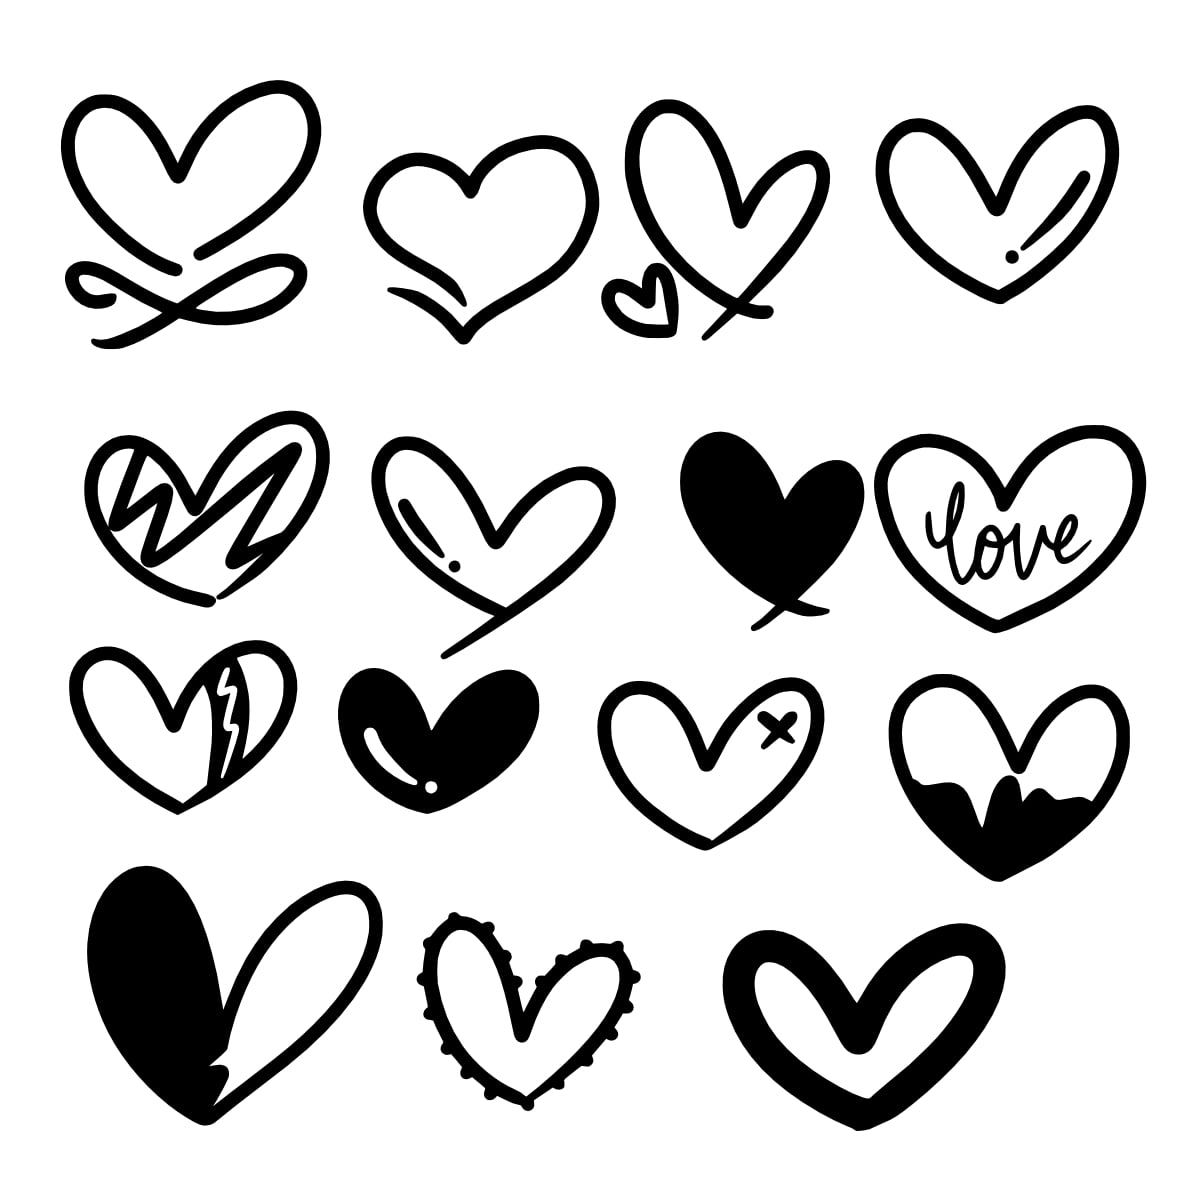 Love hearts flourish. heart shape flourishes, ornate hand drawn romantic hearts and valentines day symbol